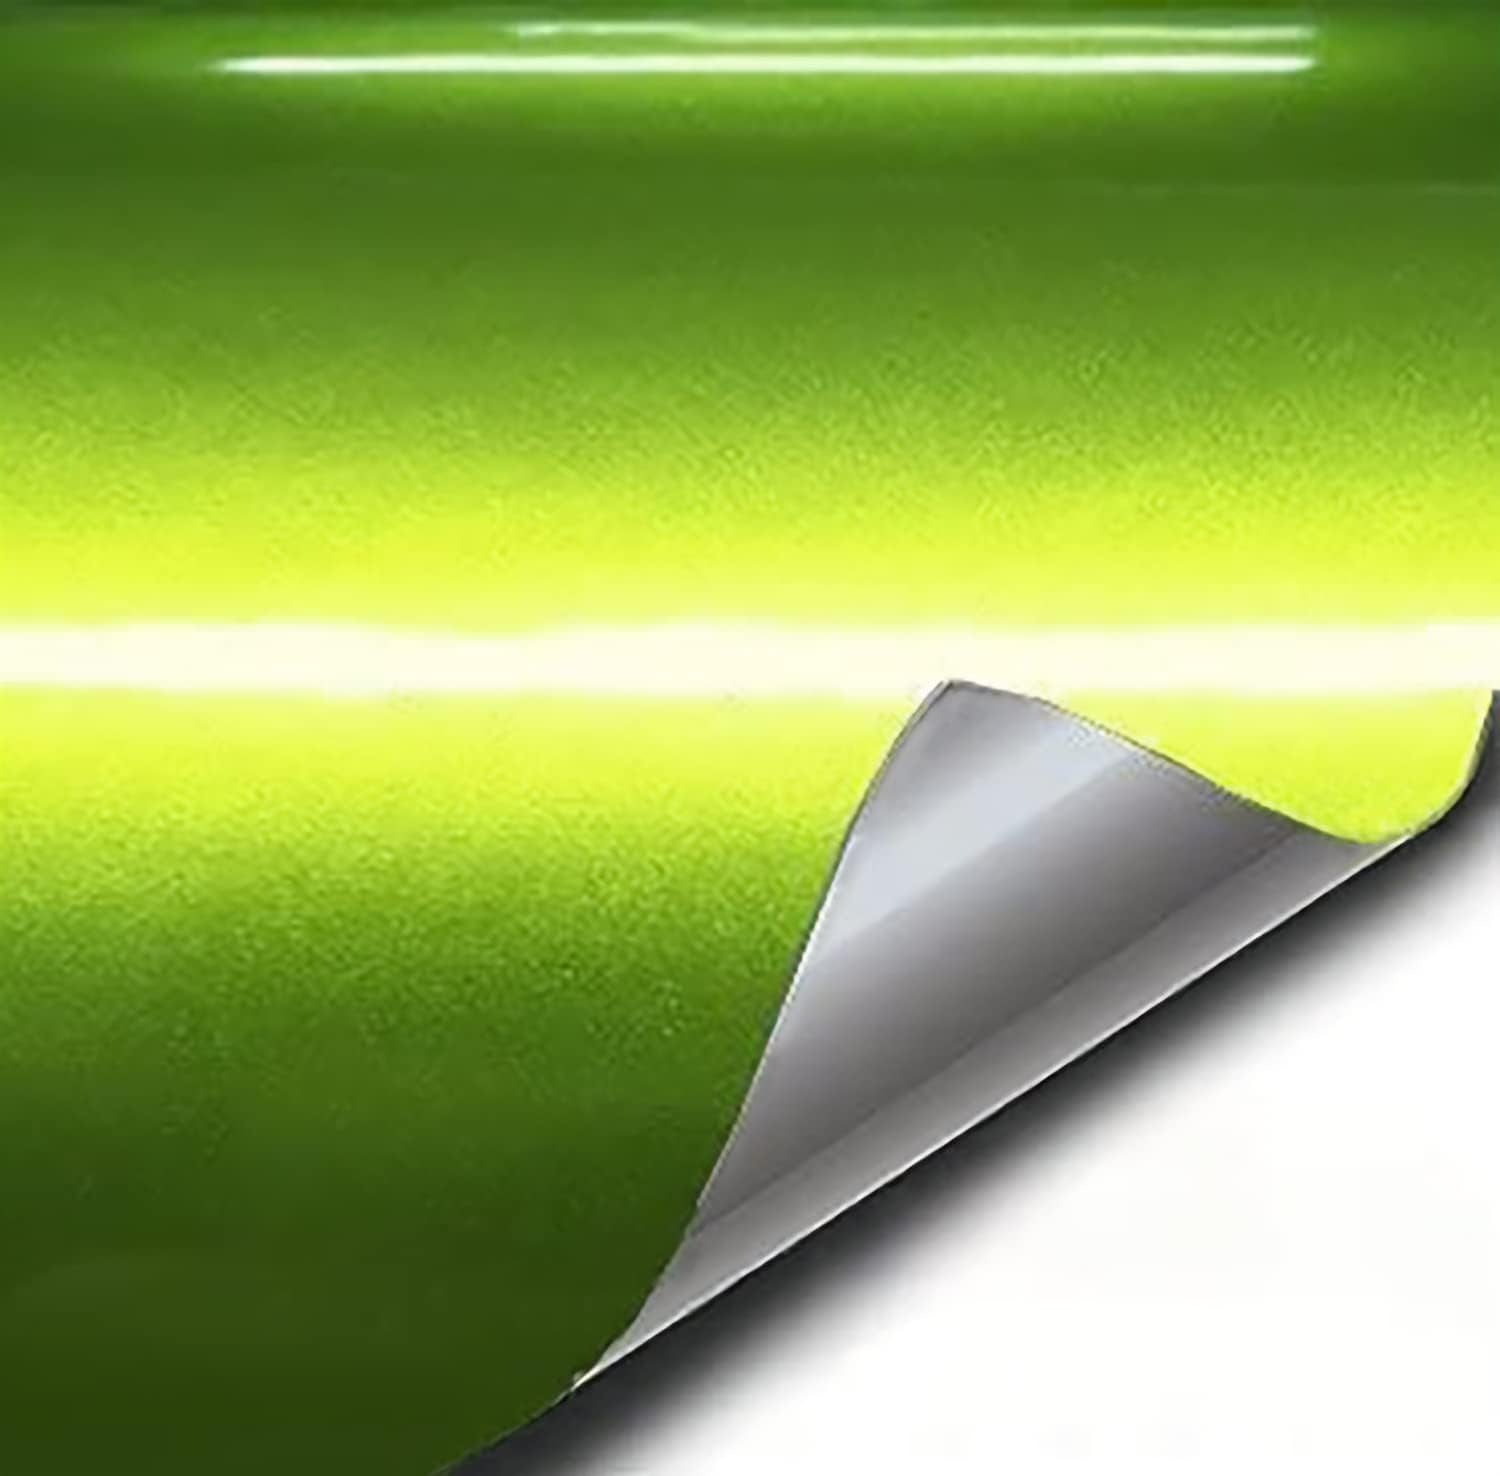 VViViD XPO Gloss Viper Lime Green Liquid Metal (17.75" x 5ft) - W.D